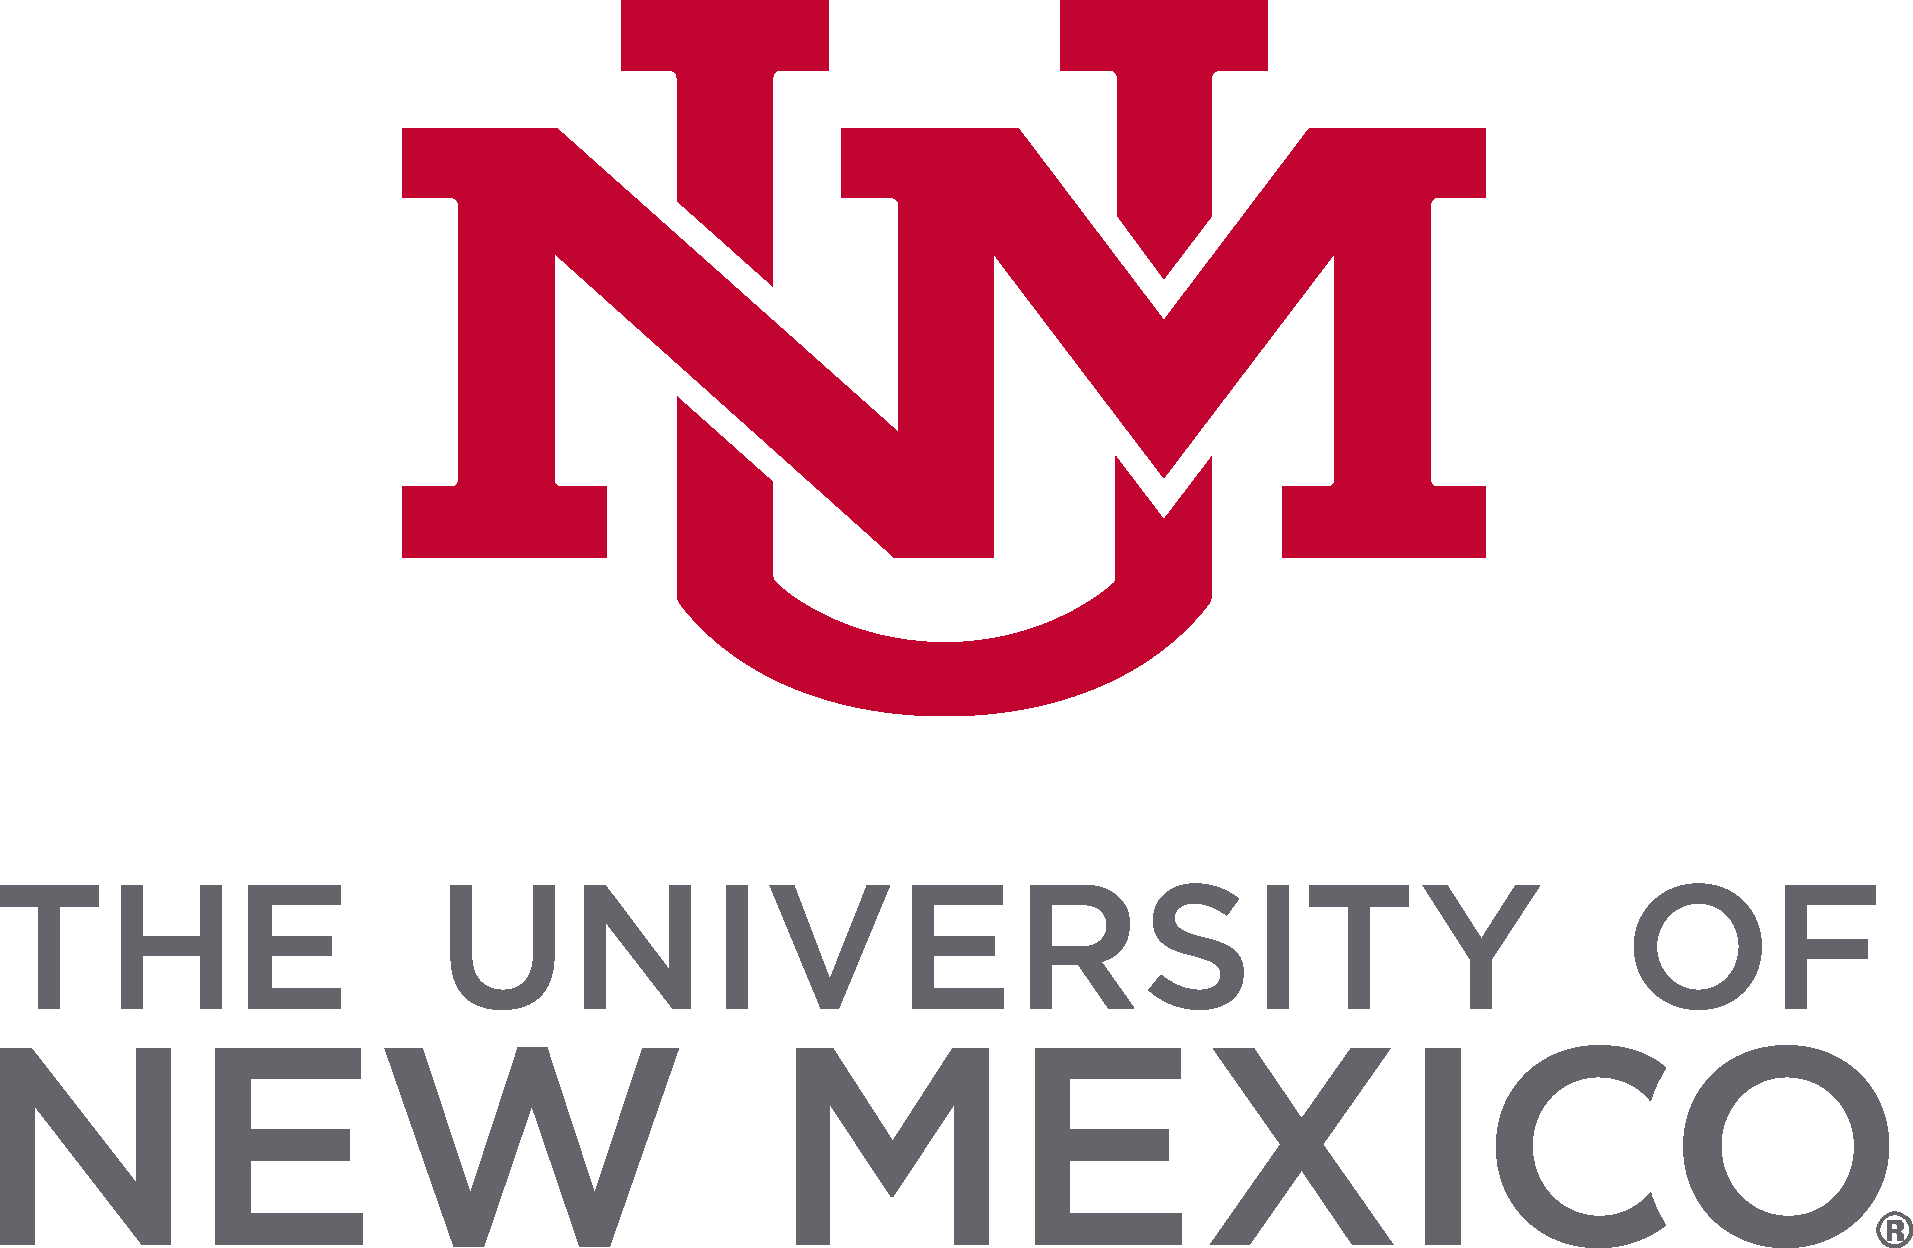 The University of New Mexico